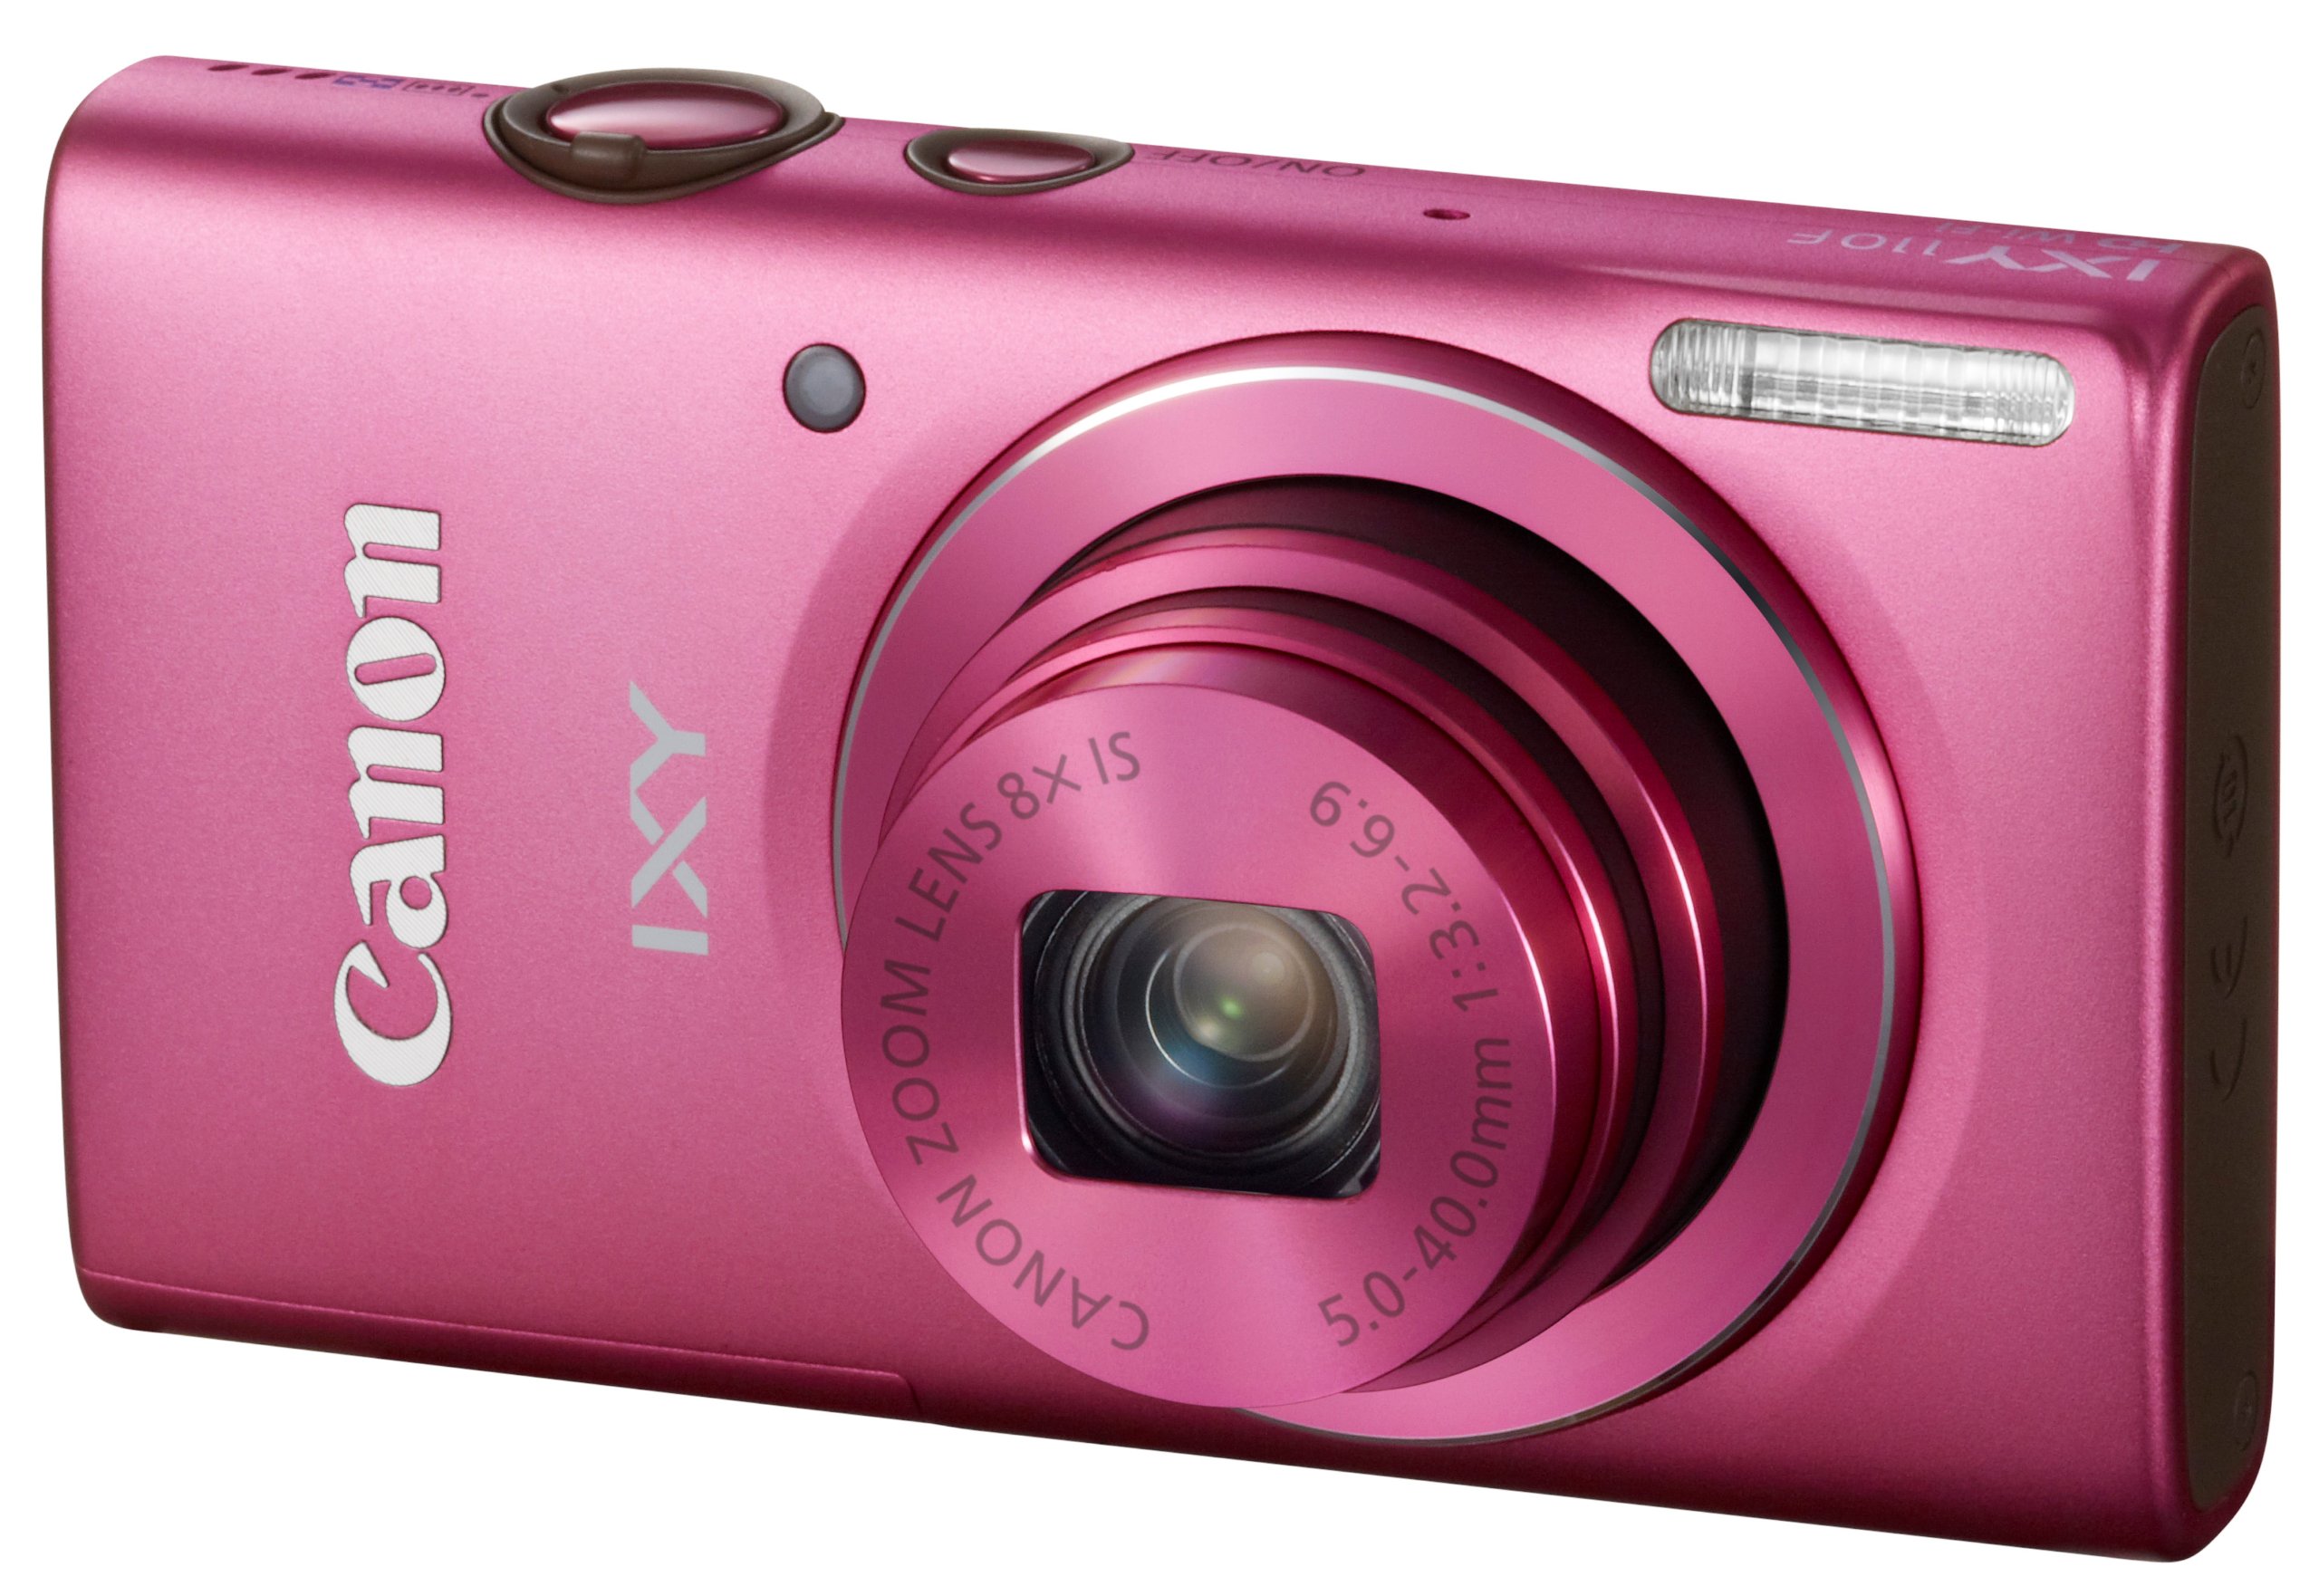 Canon Digital Camera IXY 110F Optical 8x Zoom IXY110F - International Version